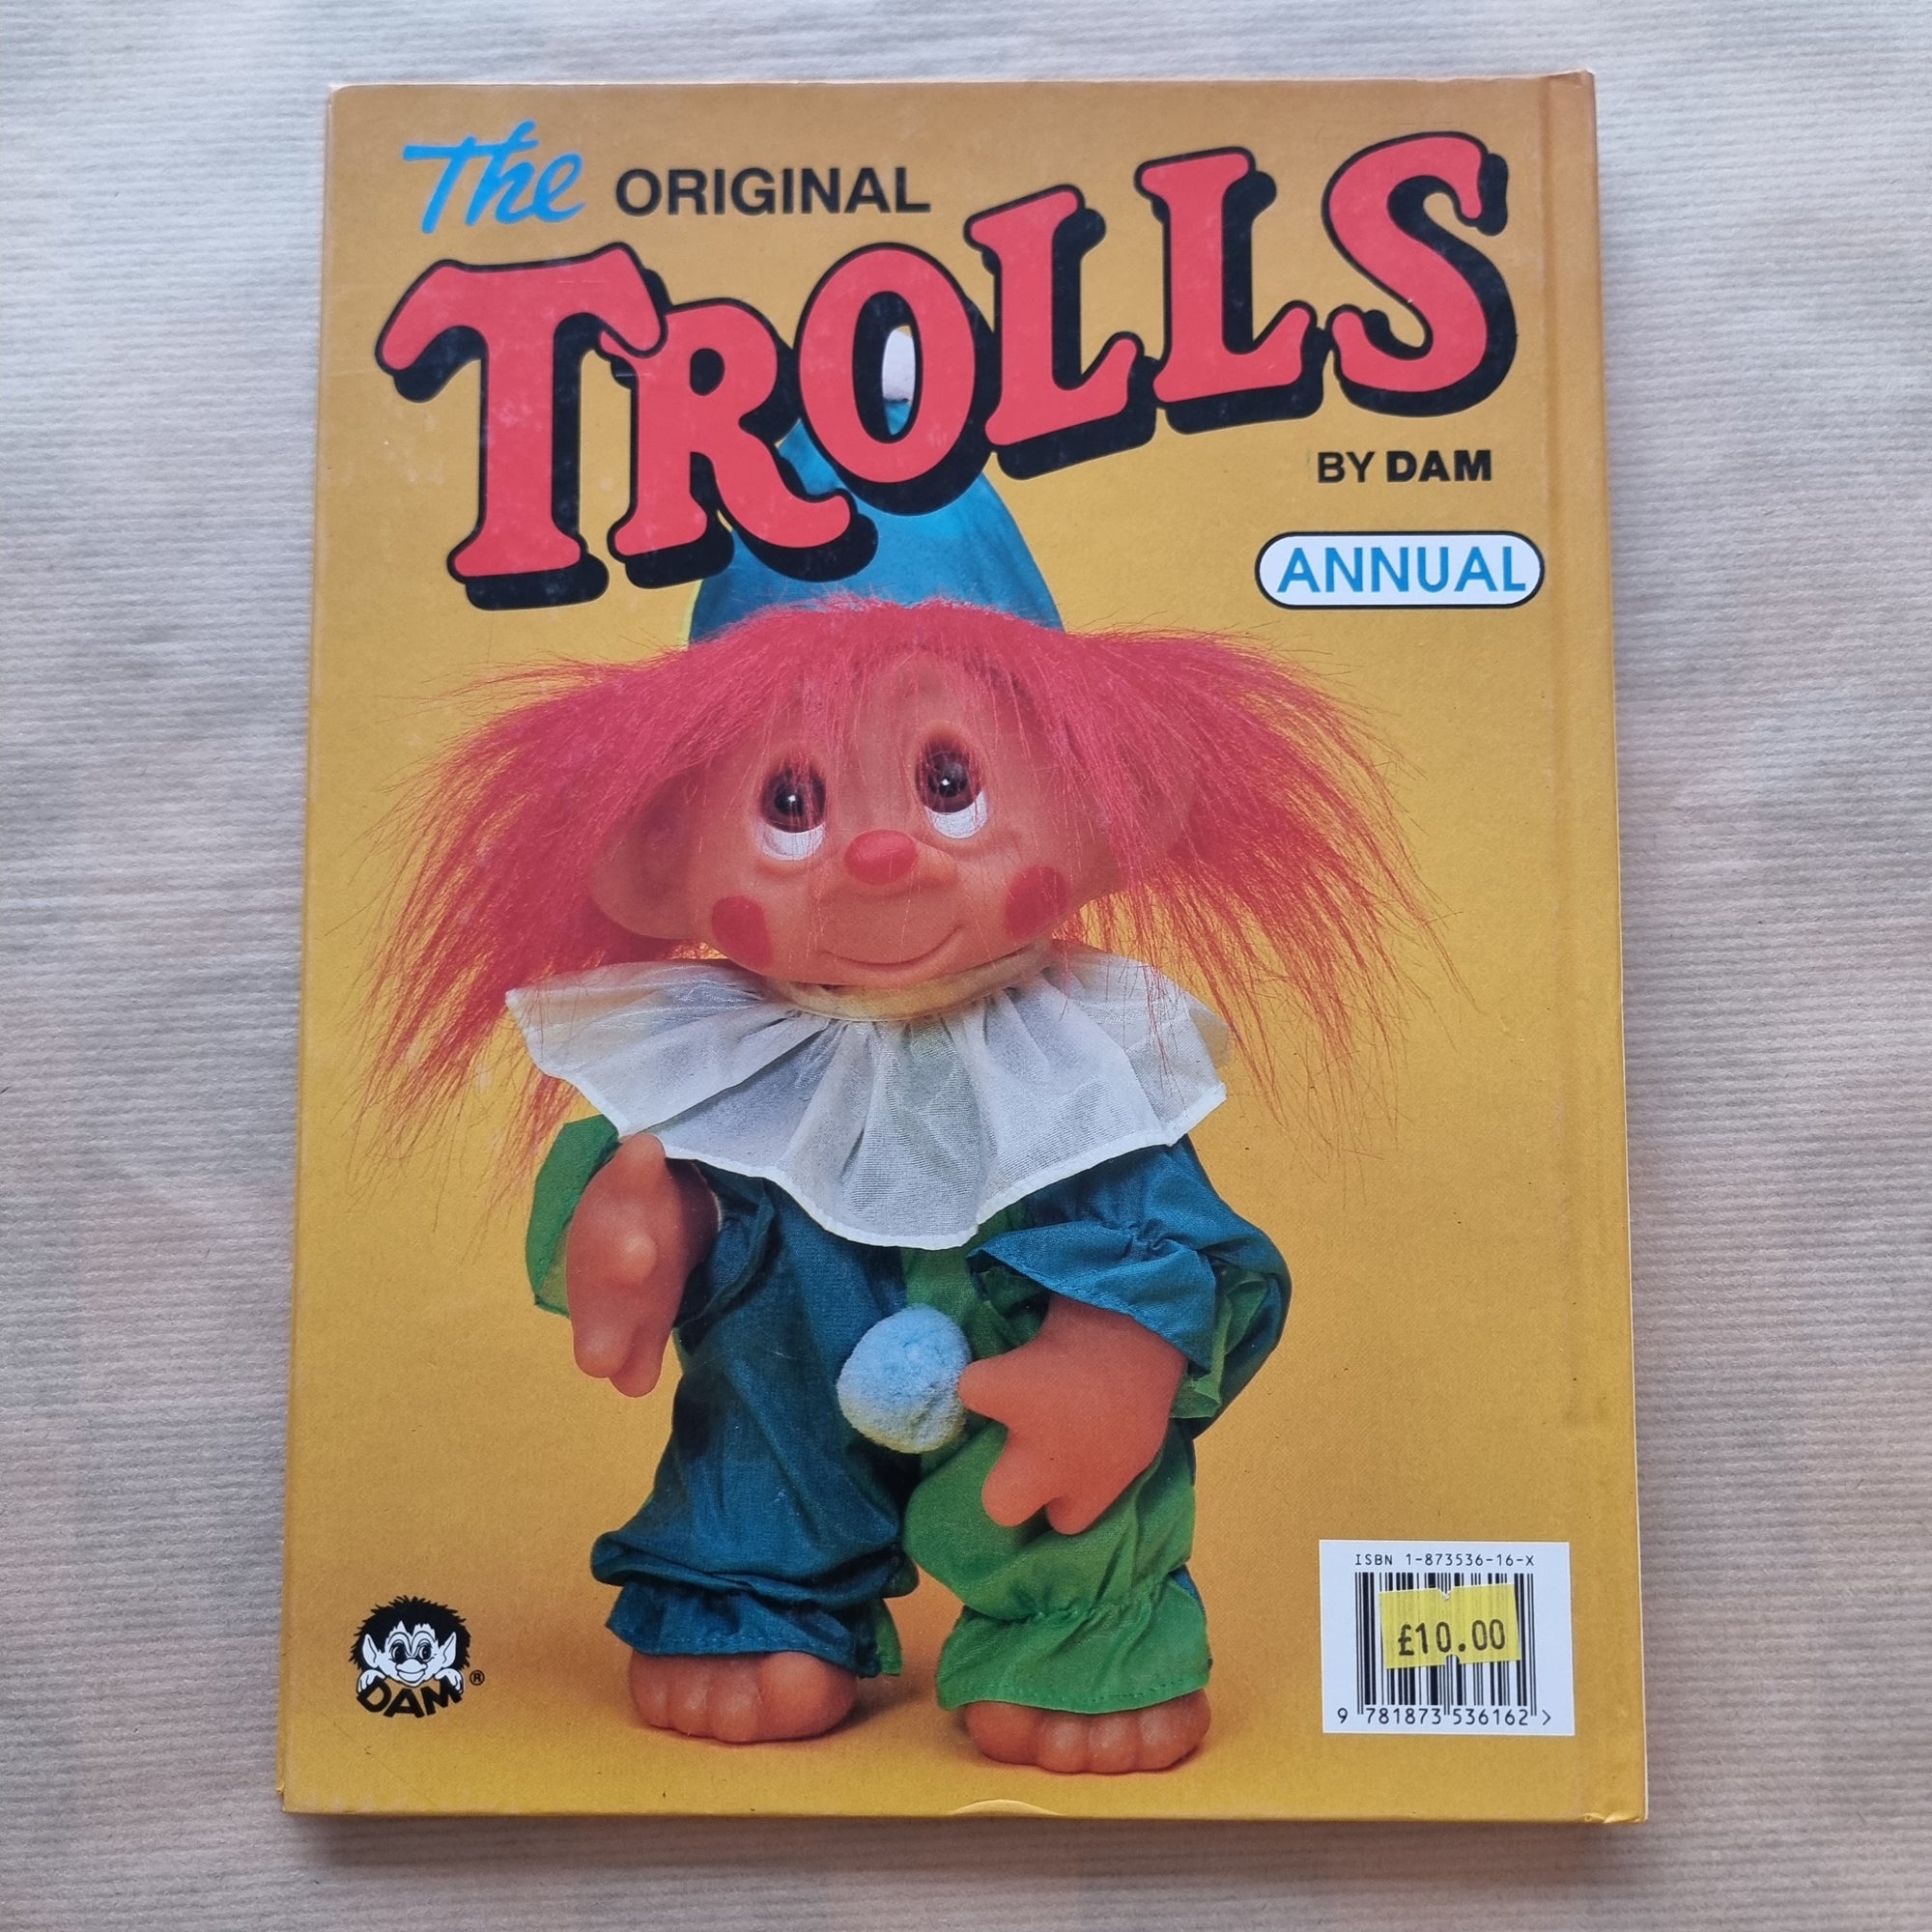 The Original Trolls Annual